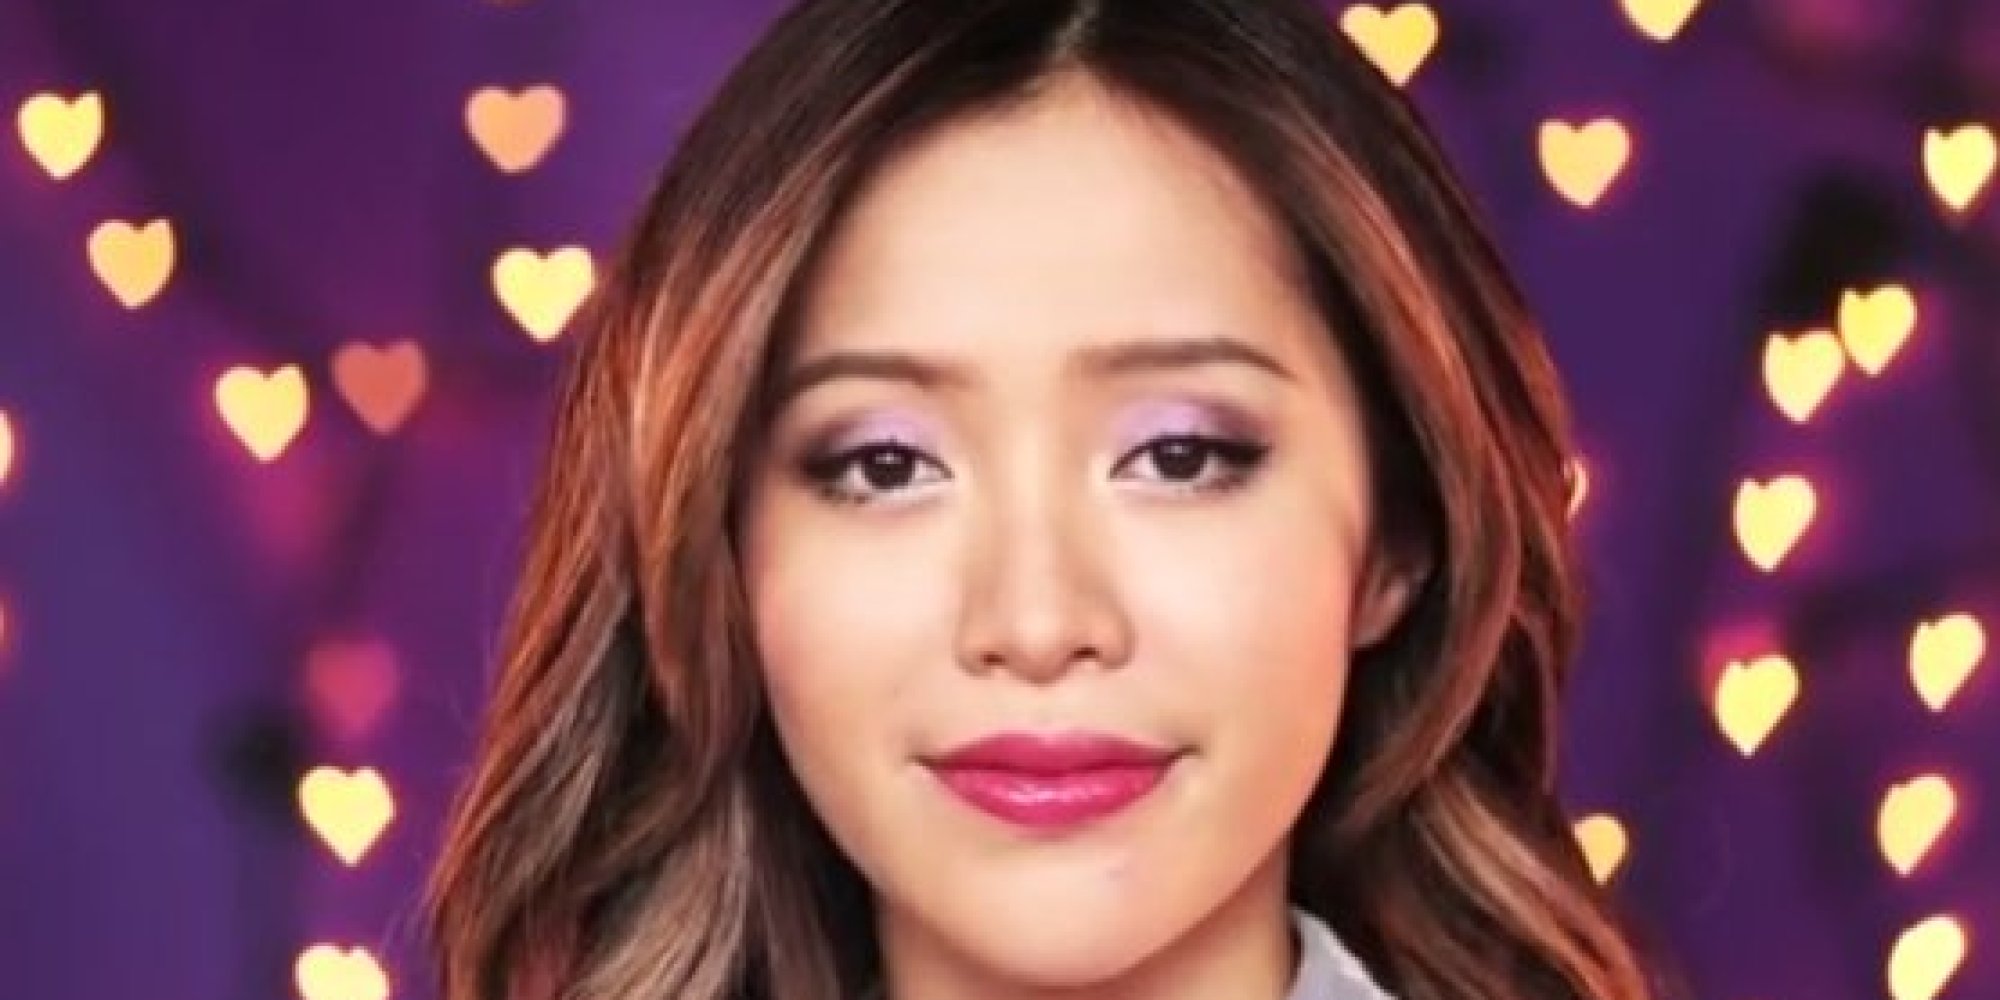  Michelle  Phan  s Romantic Valentine s Day Makeup  Tutorial 